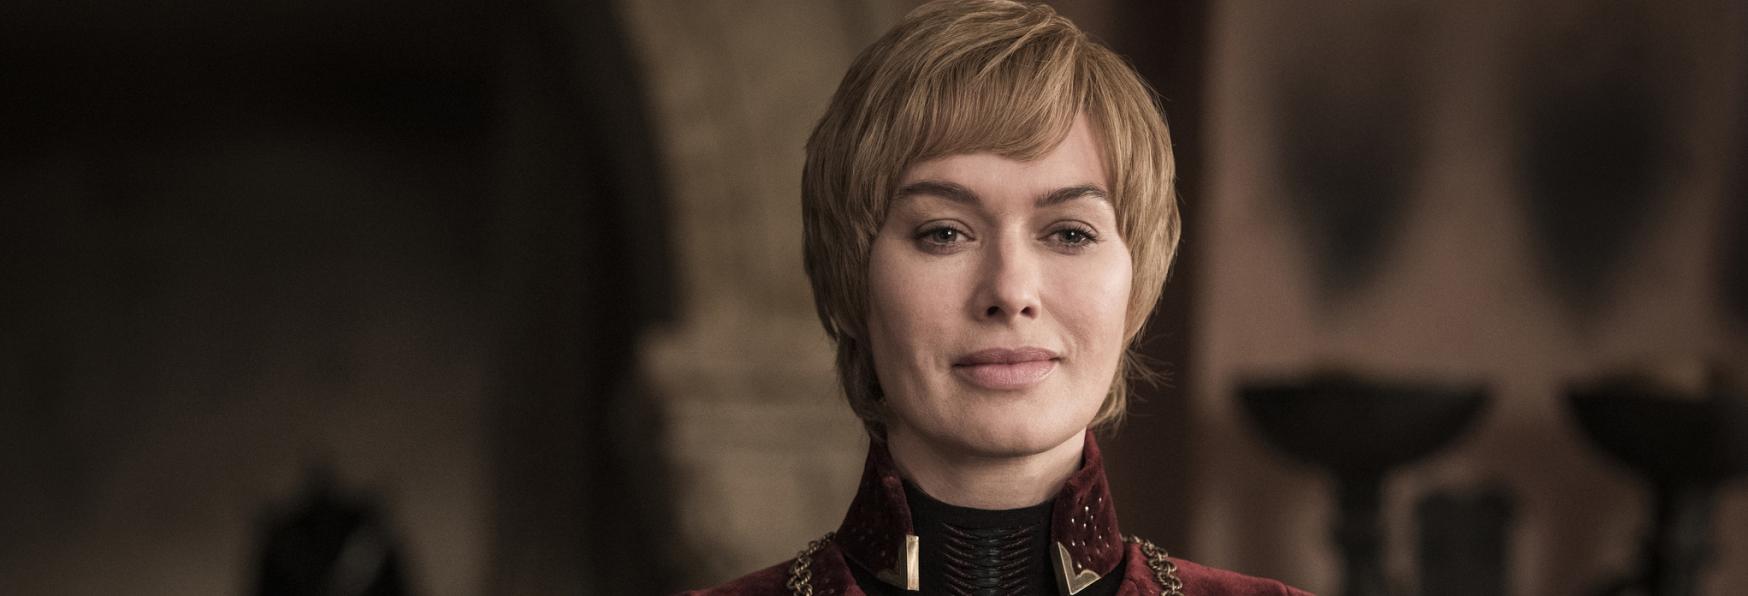 White House Plumbers: Lena Headey (Game of Thrones) nel Cast della Serie TV HBO su Watergate